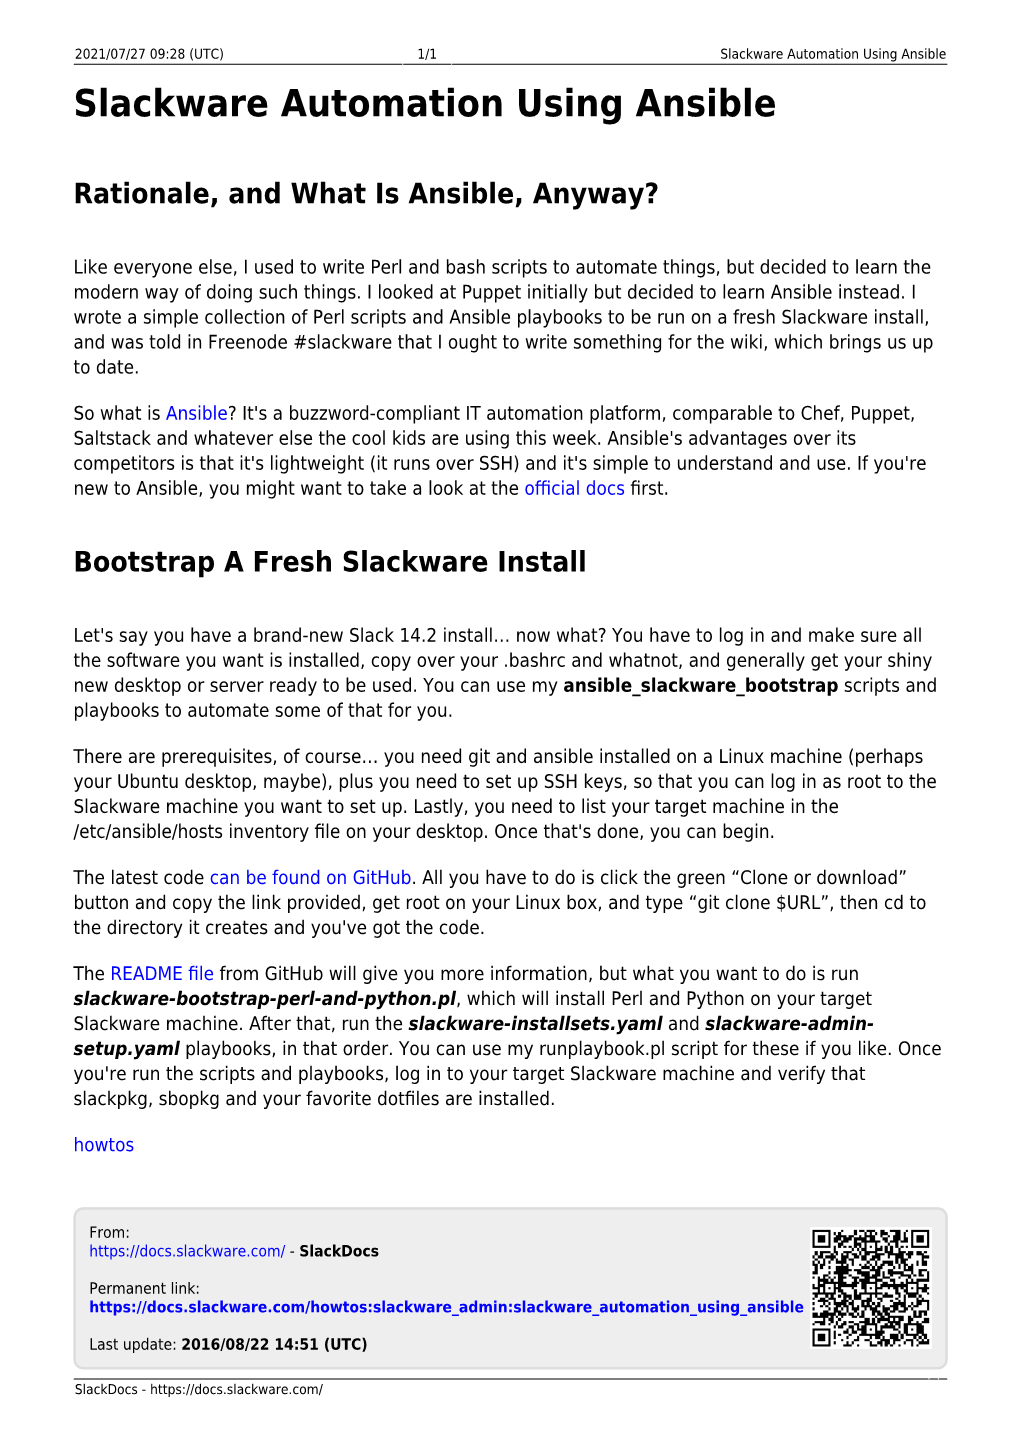 Slackware Automation Using Ansible Slackware Automation Using Ansible